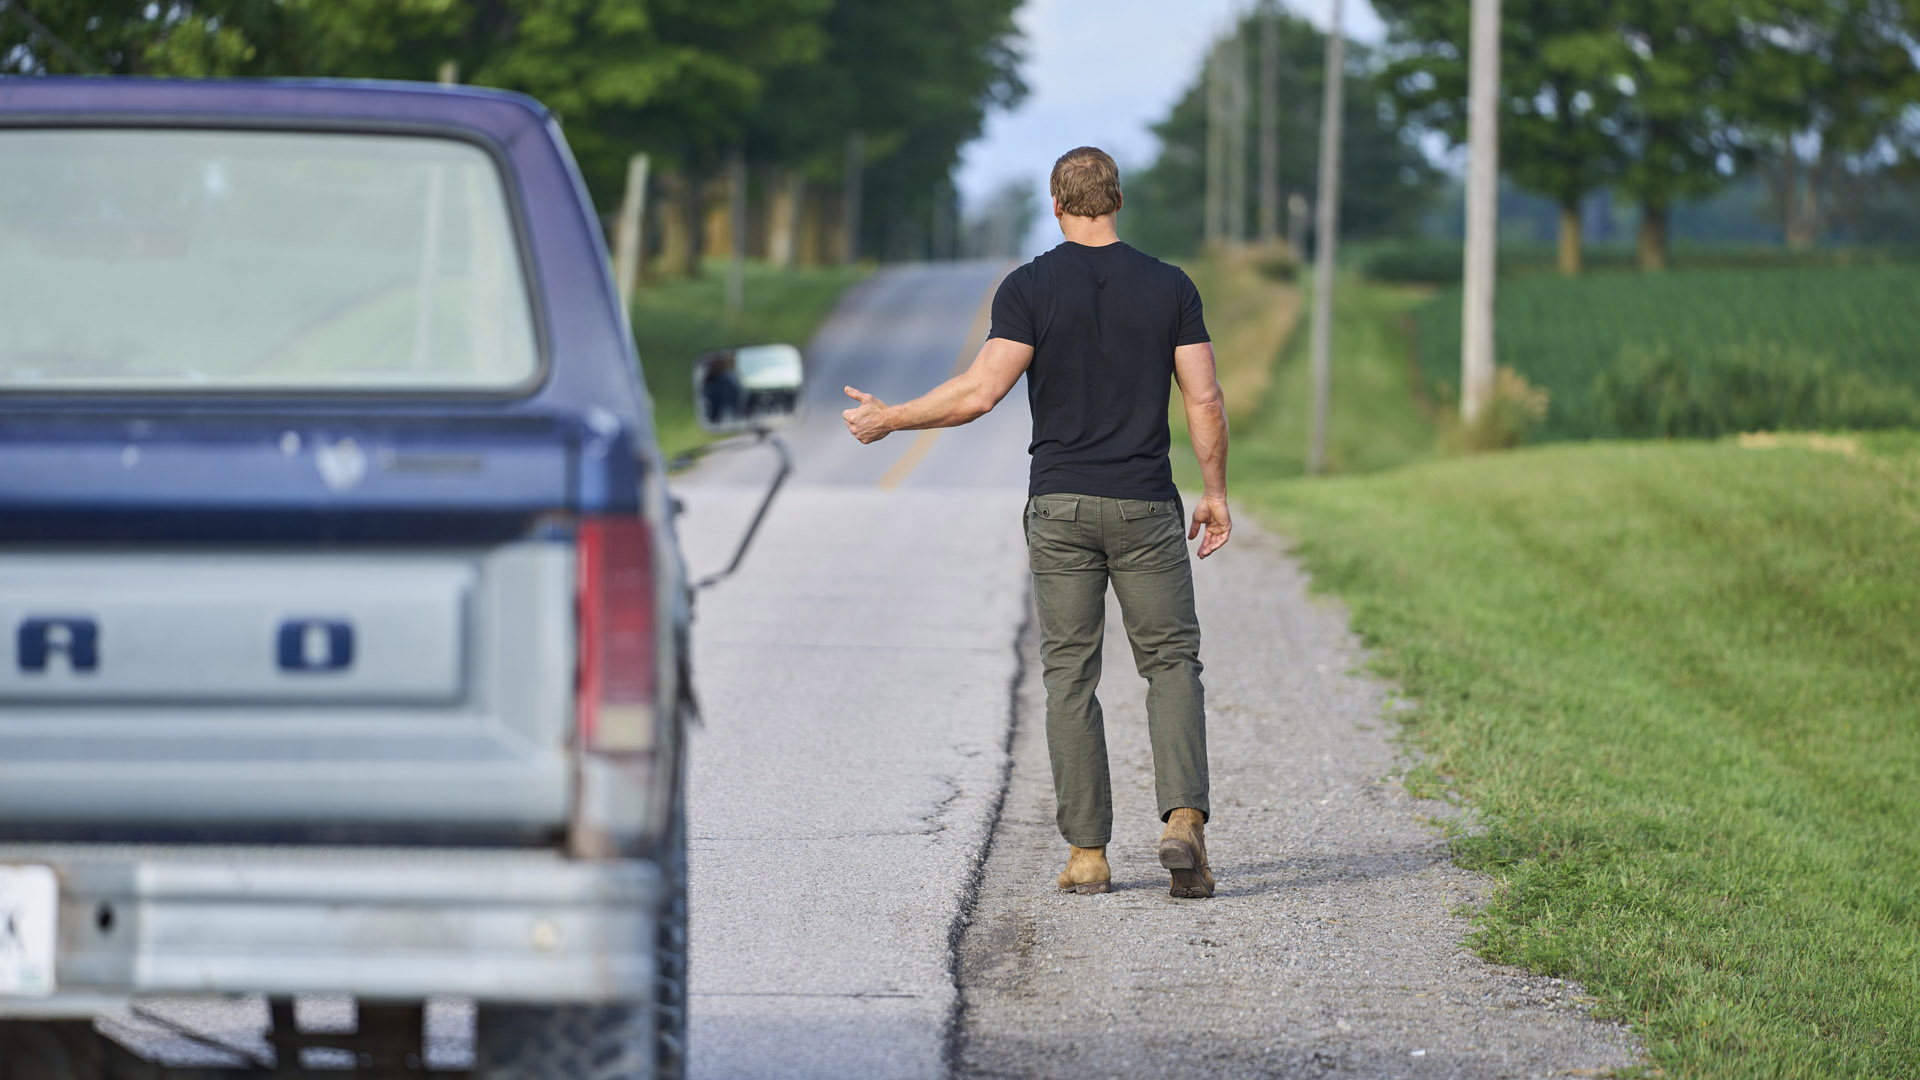 Jack Reacher hitchhikes for a lift in Reacher season 1